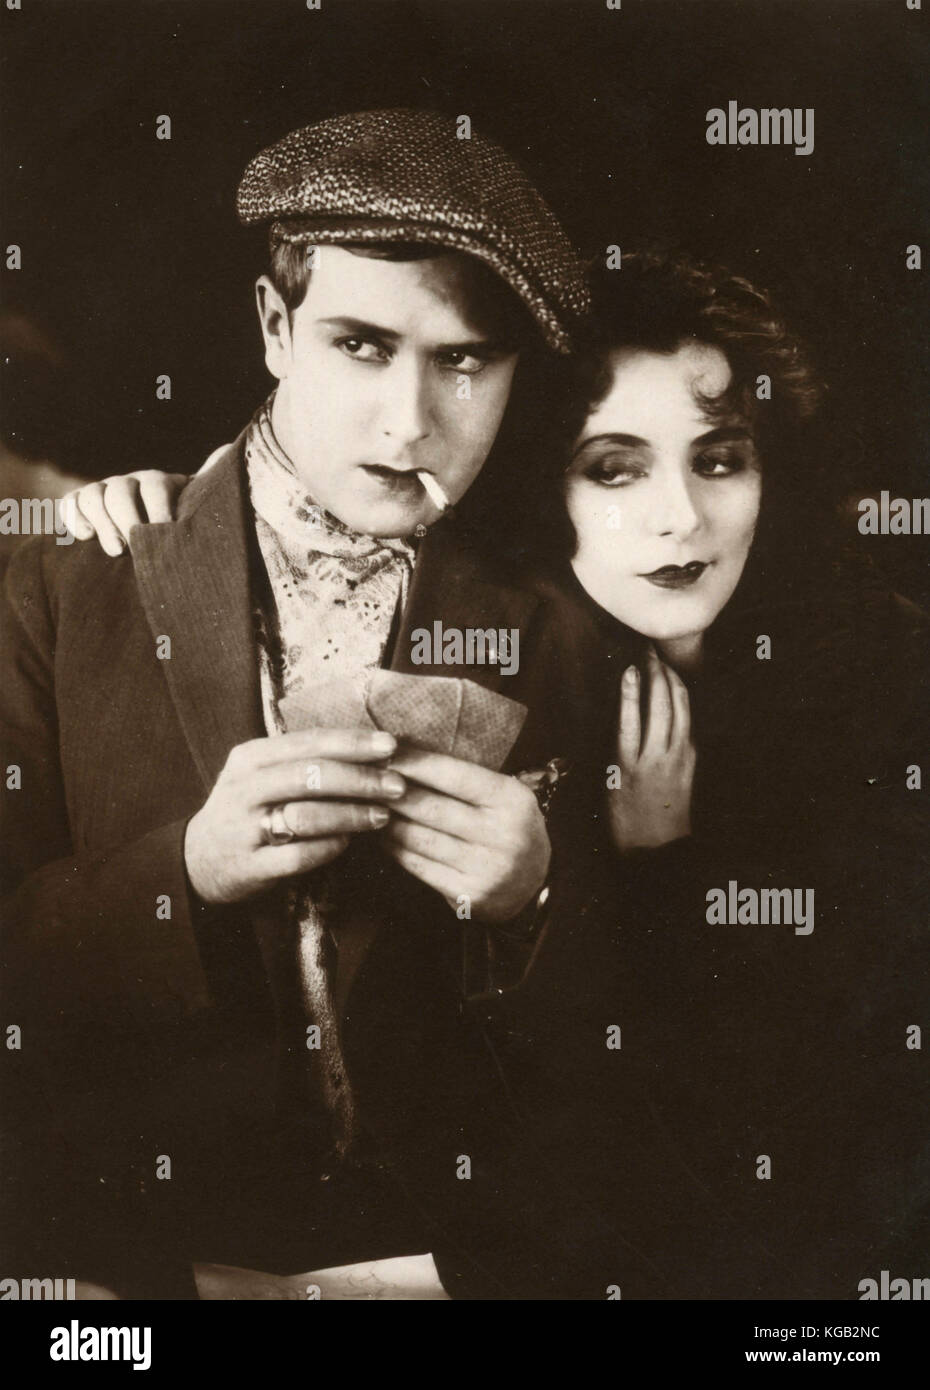 silent movie stars